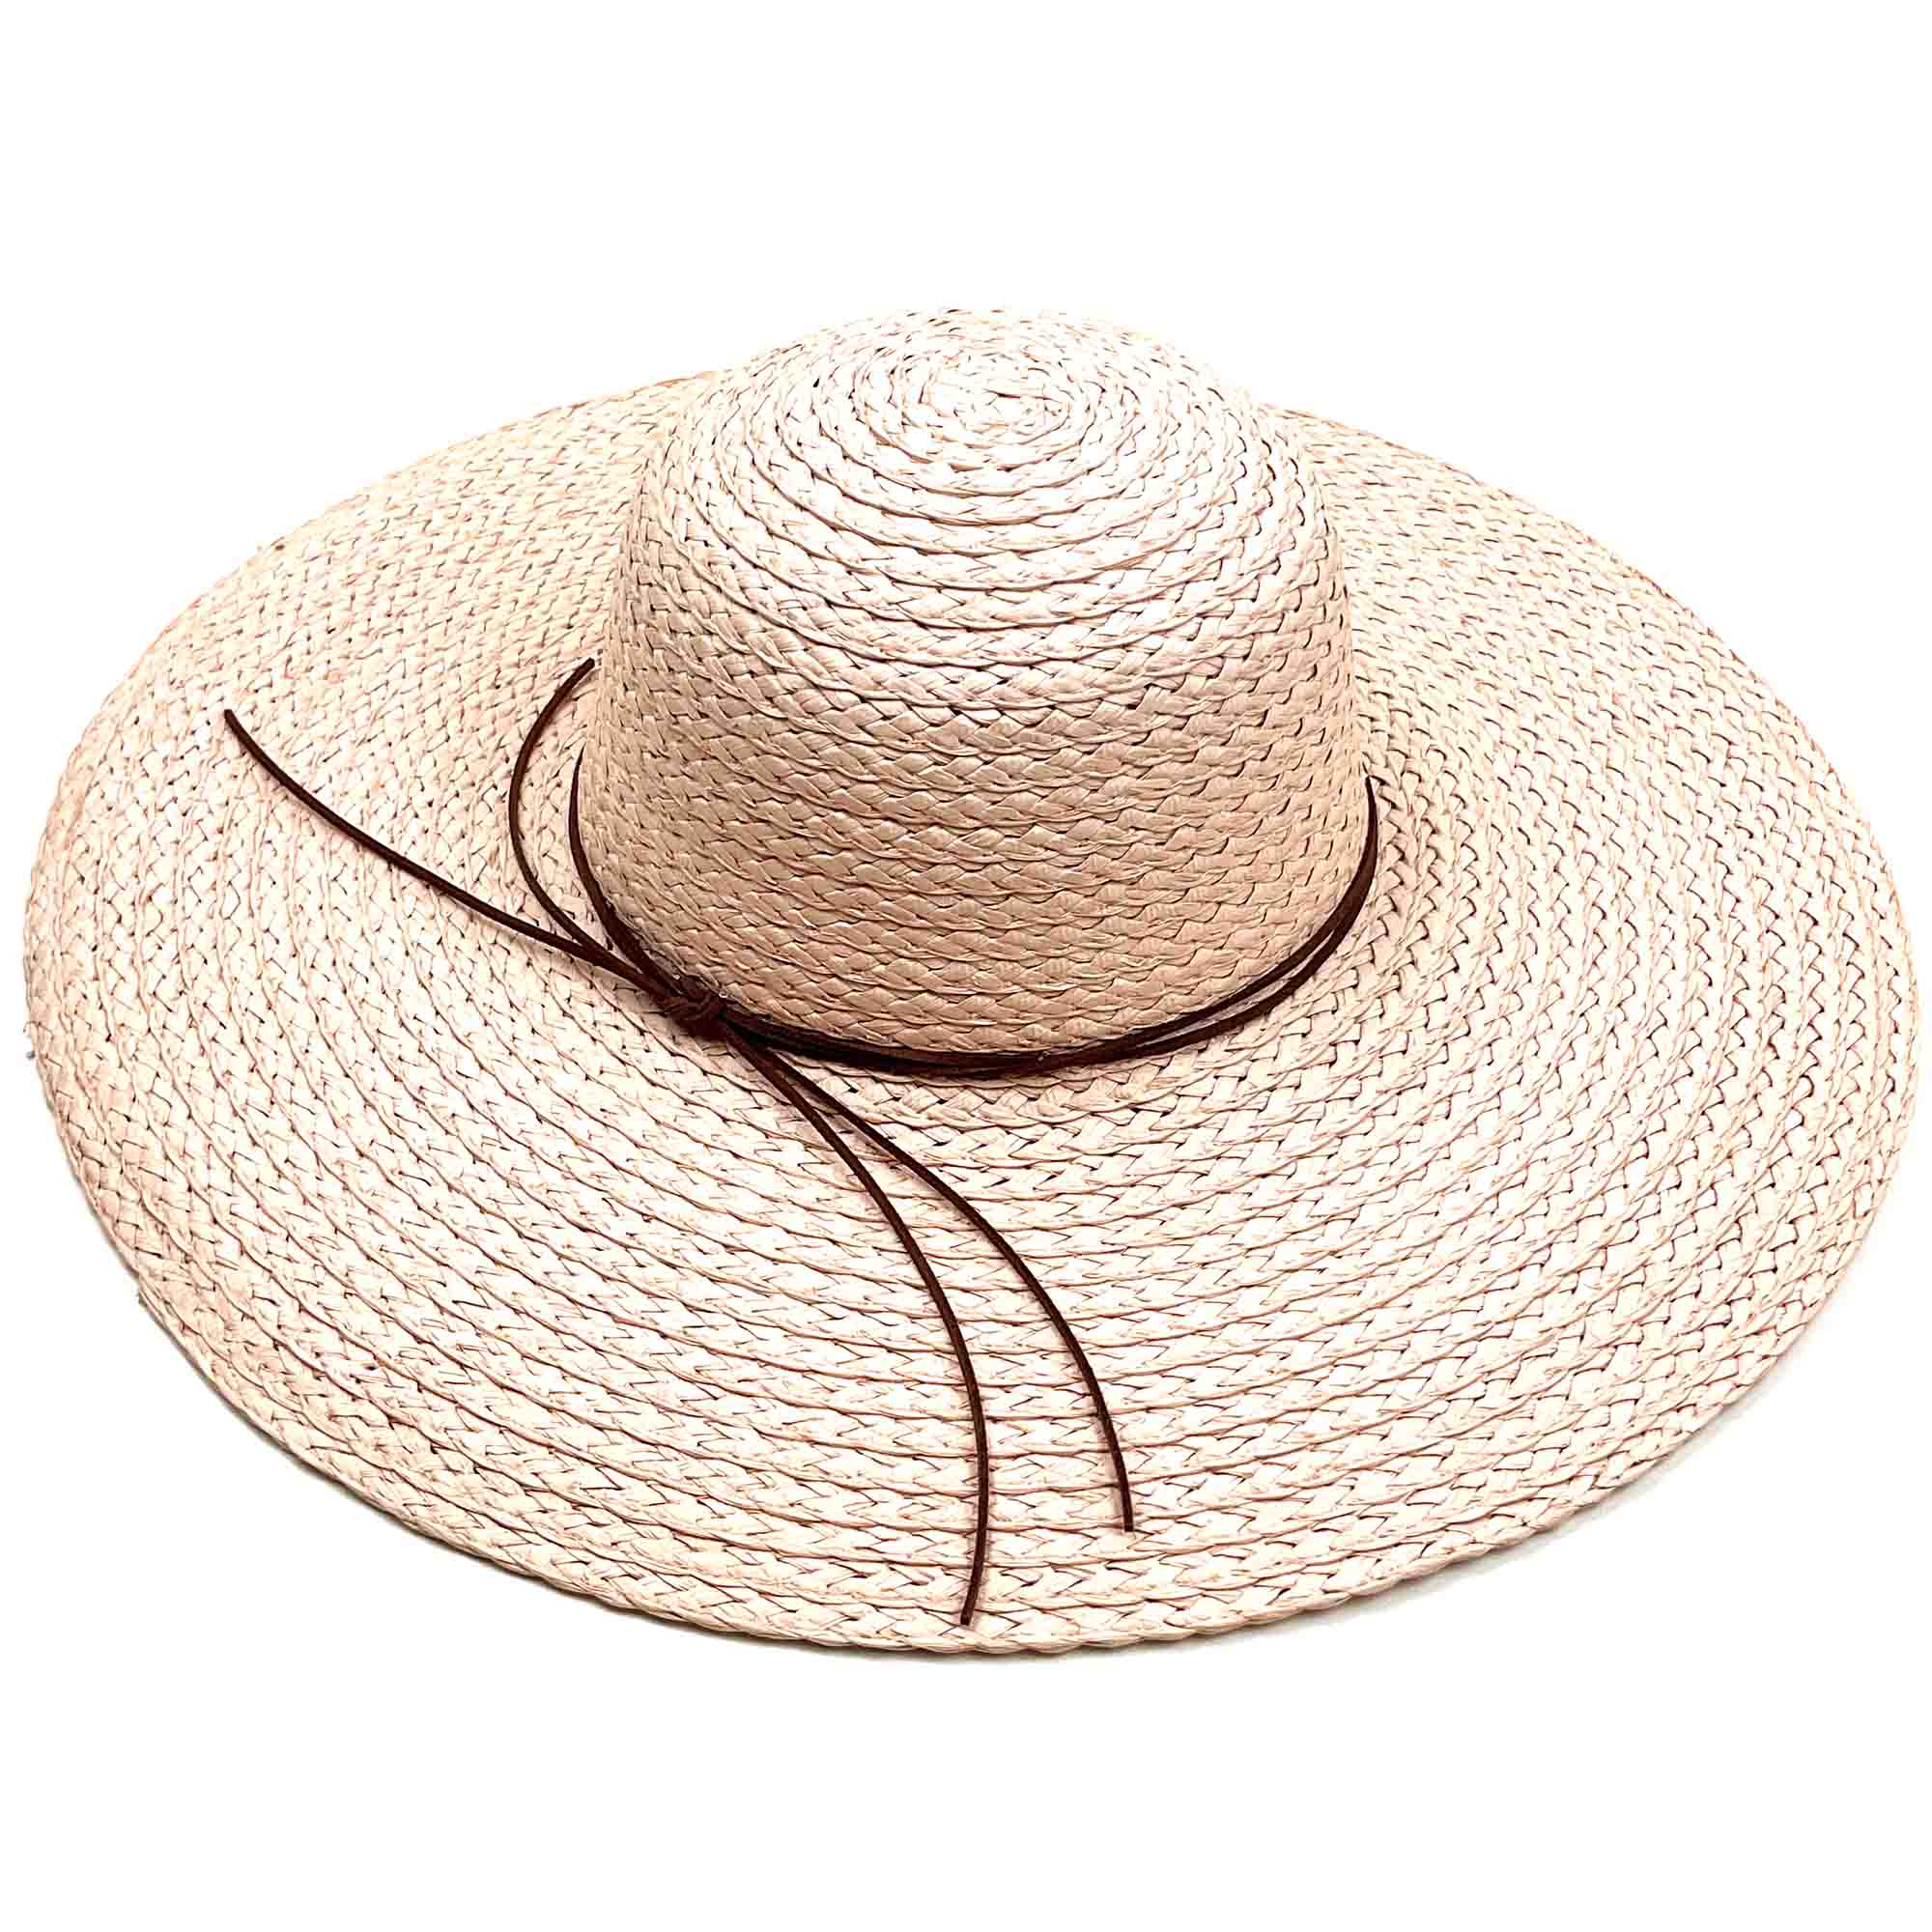 Buy Womens Straw Hat Wide Brim Floppy Beach Cap Adjustable